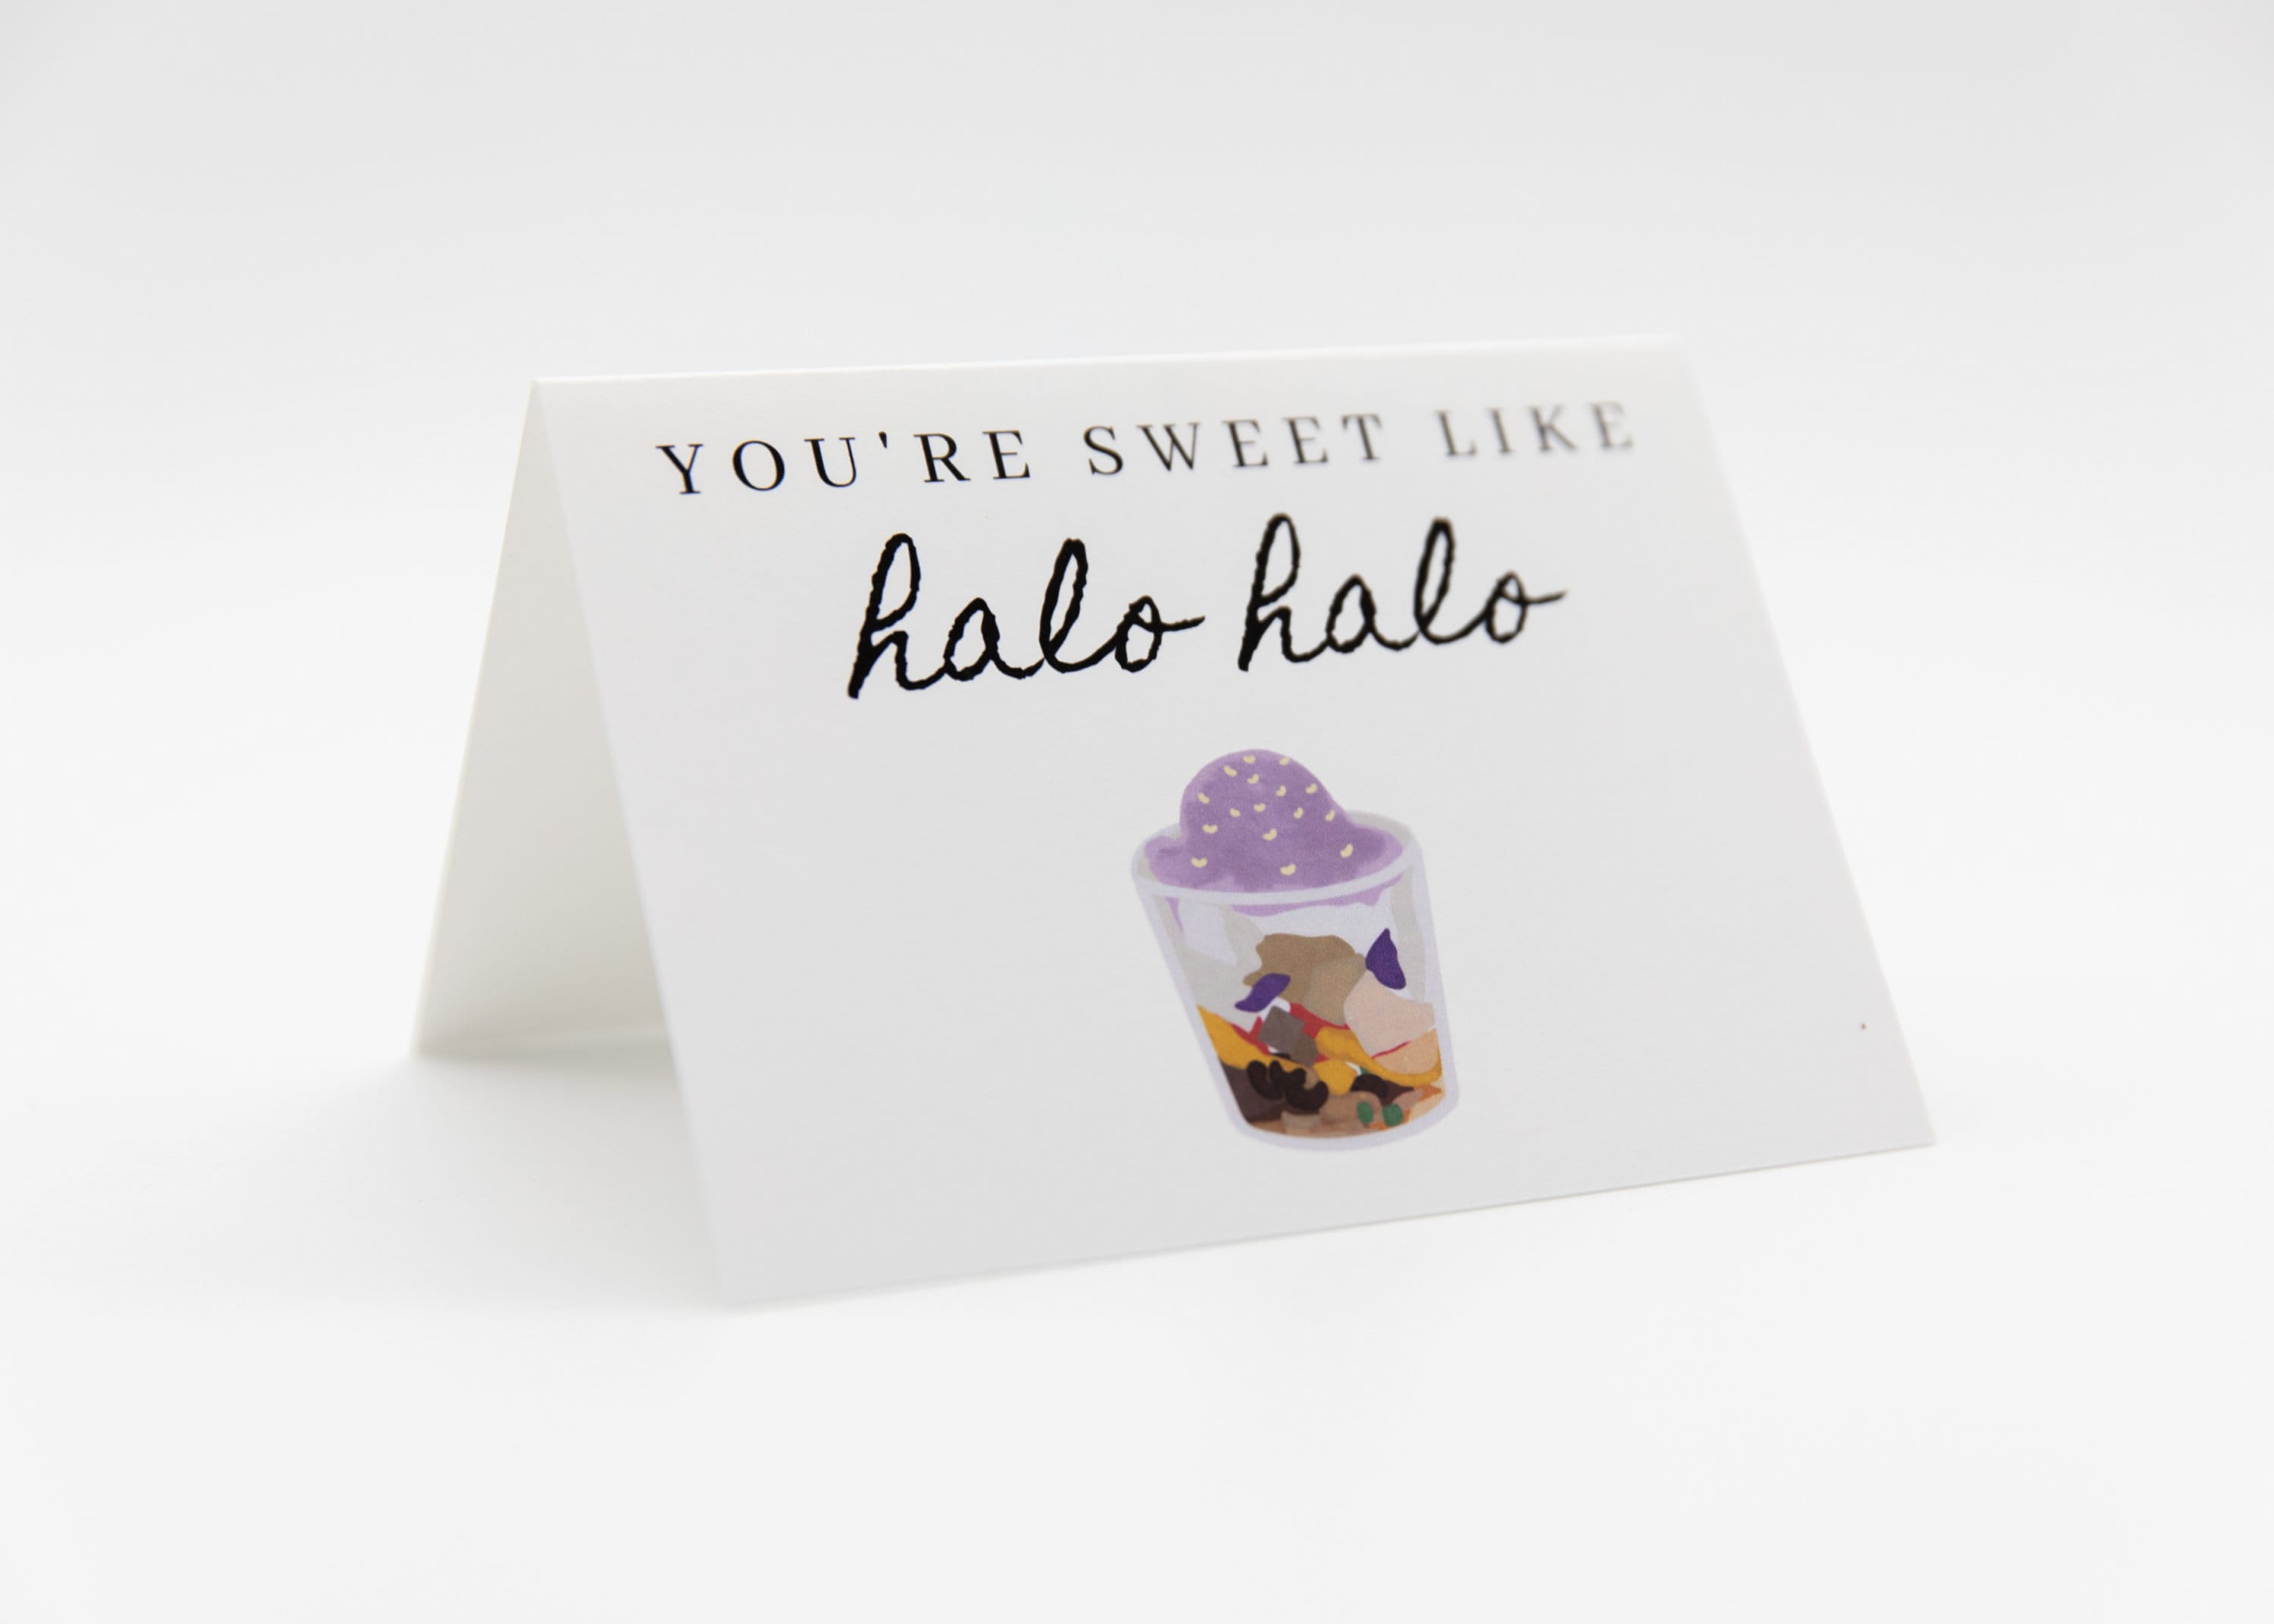 Mie Makes You're Sweet Like Greeting Halo Halo Card, Filipino Desserts, Filipino Food, Filipino Snacks, Pinoy Desserts, Filipino